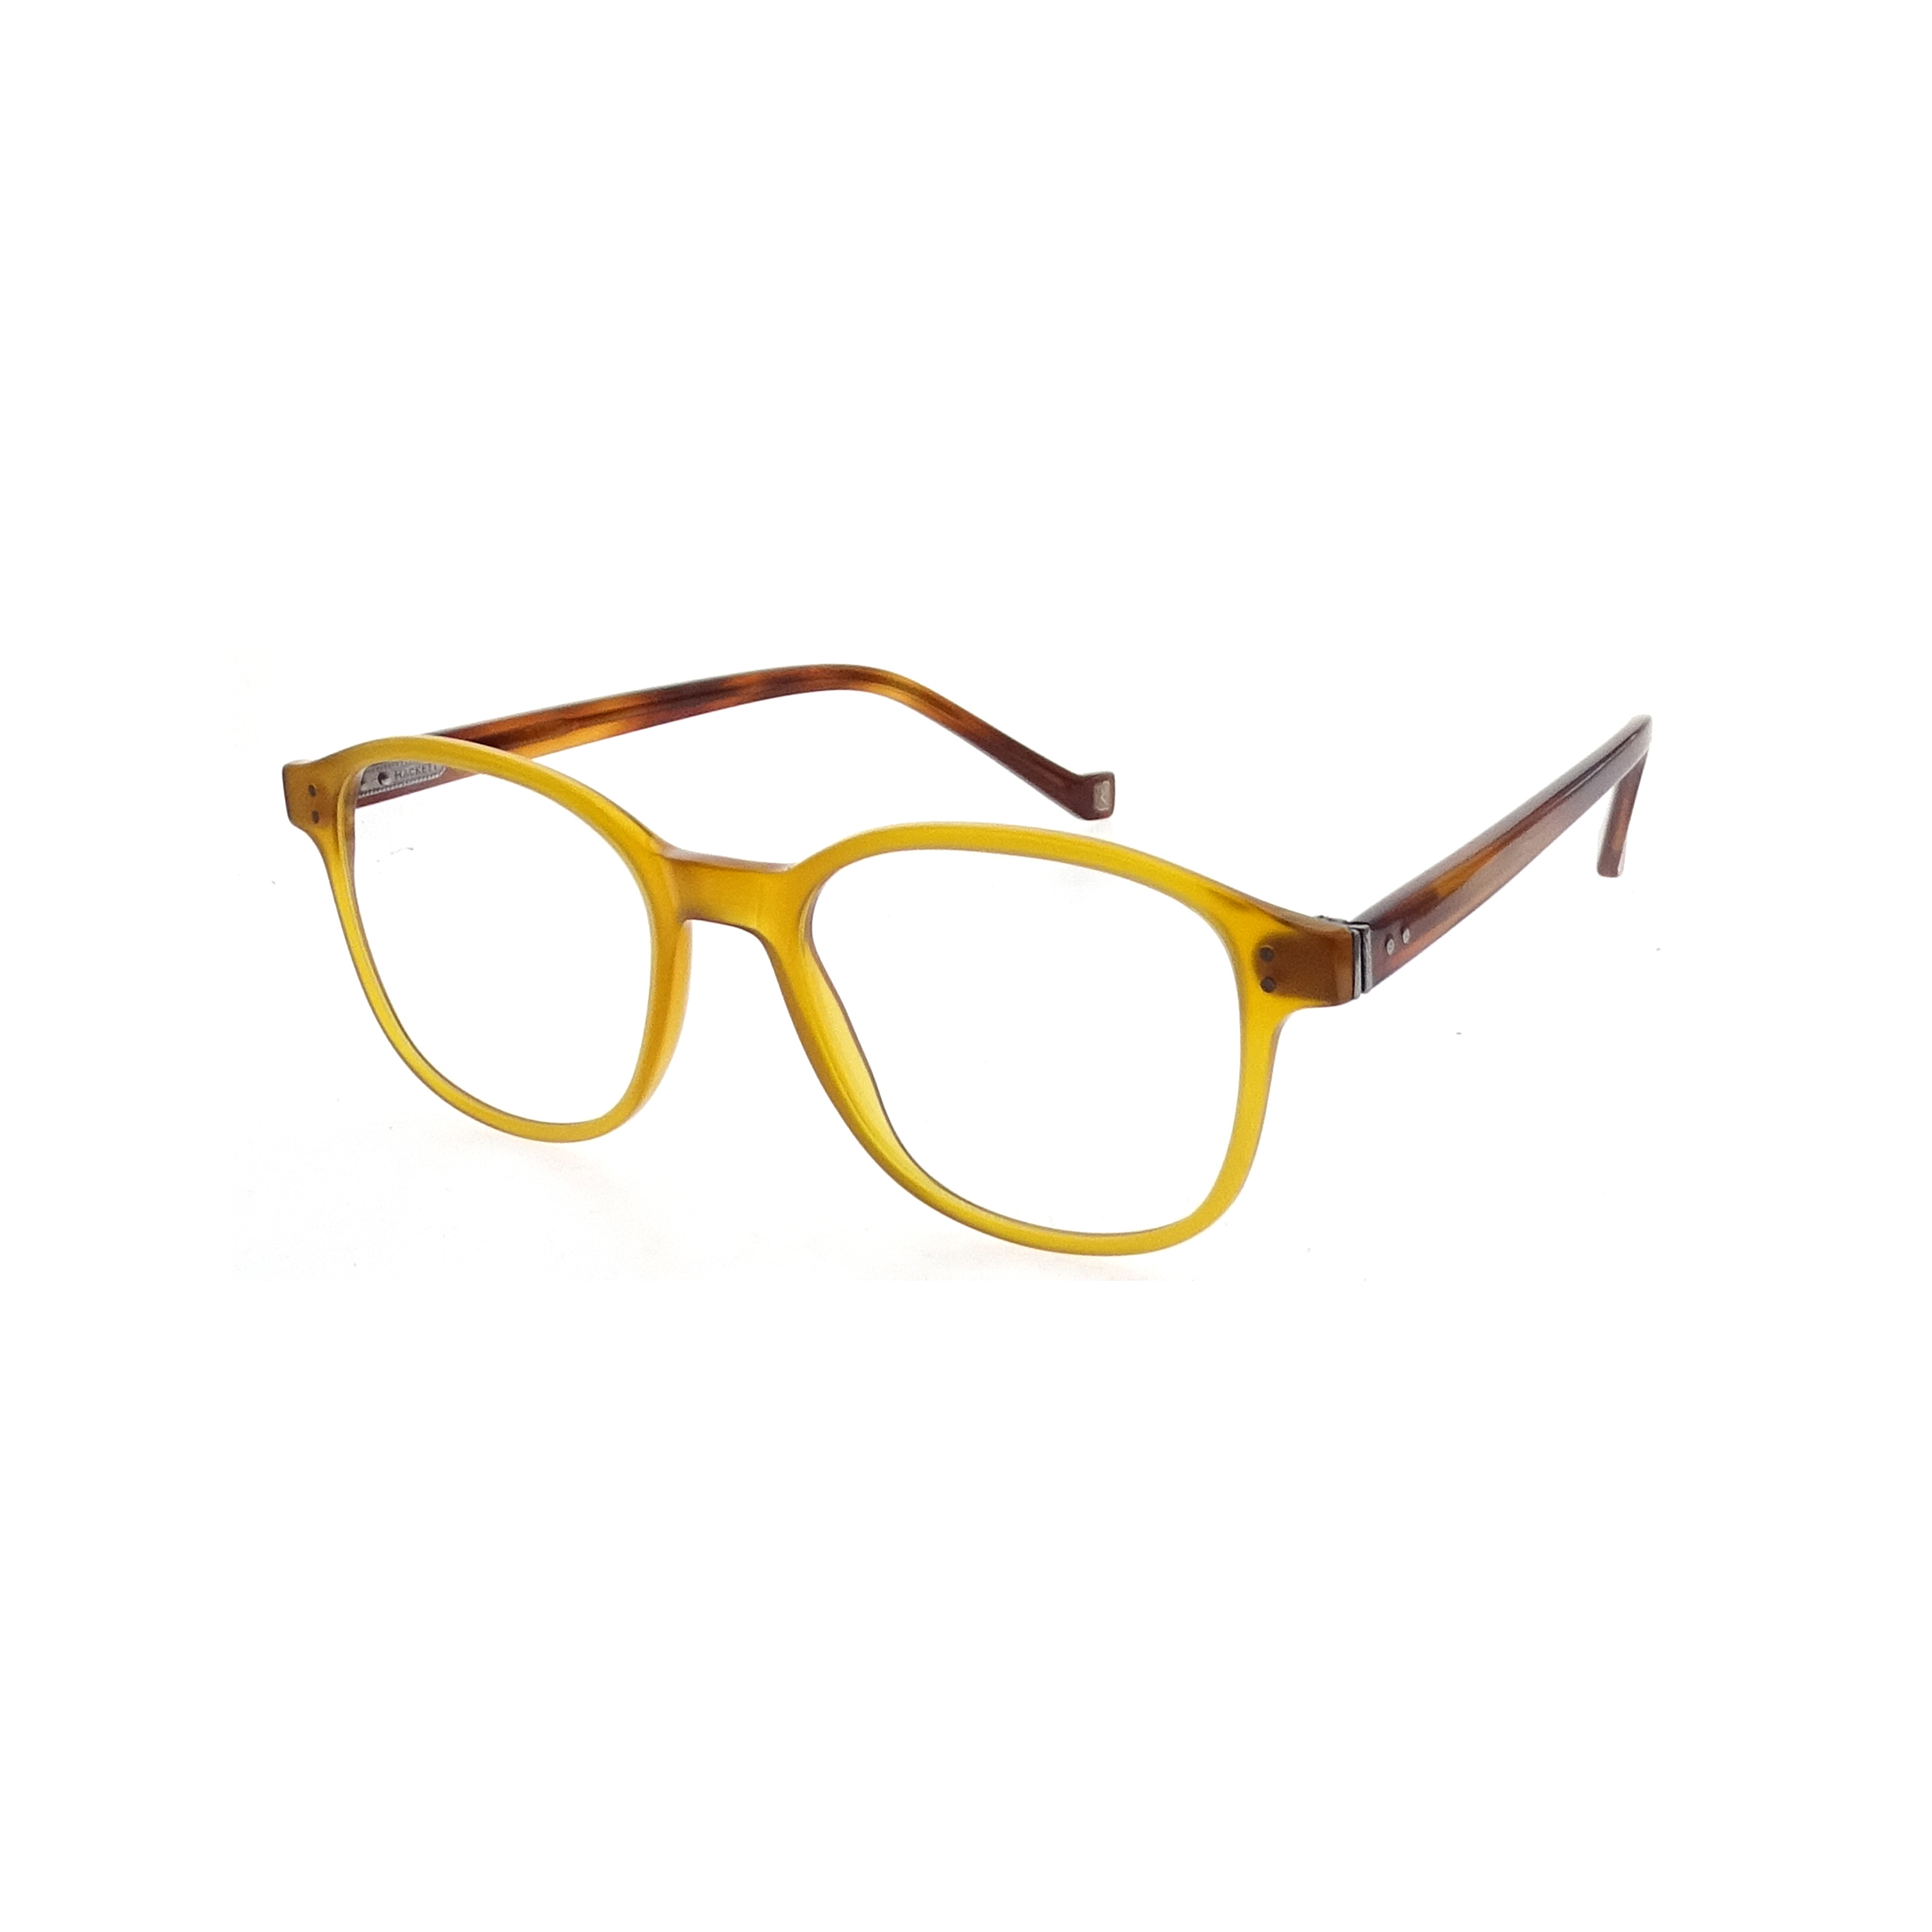 Acetato translúcido amarillo marco completo ojos gafas lo-b352